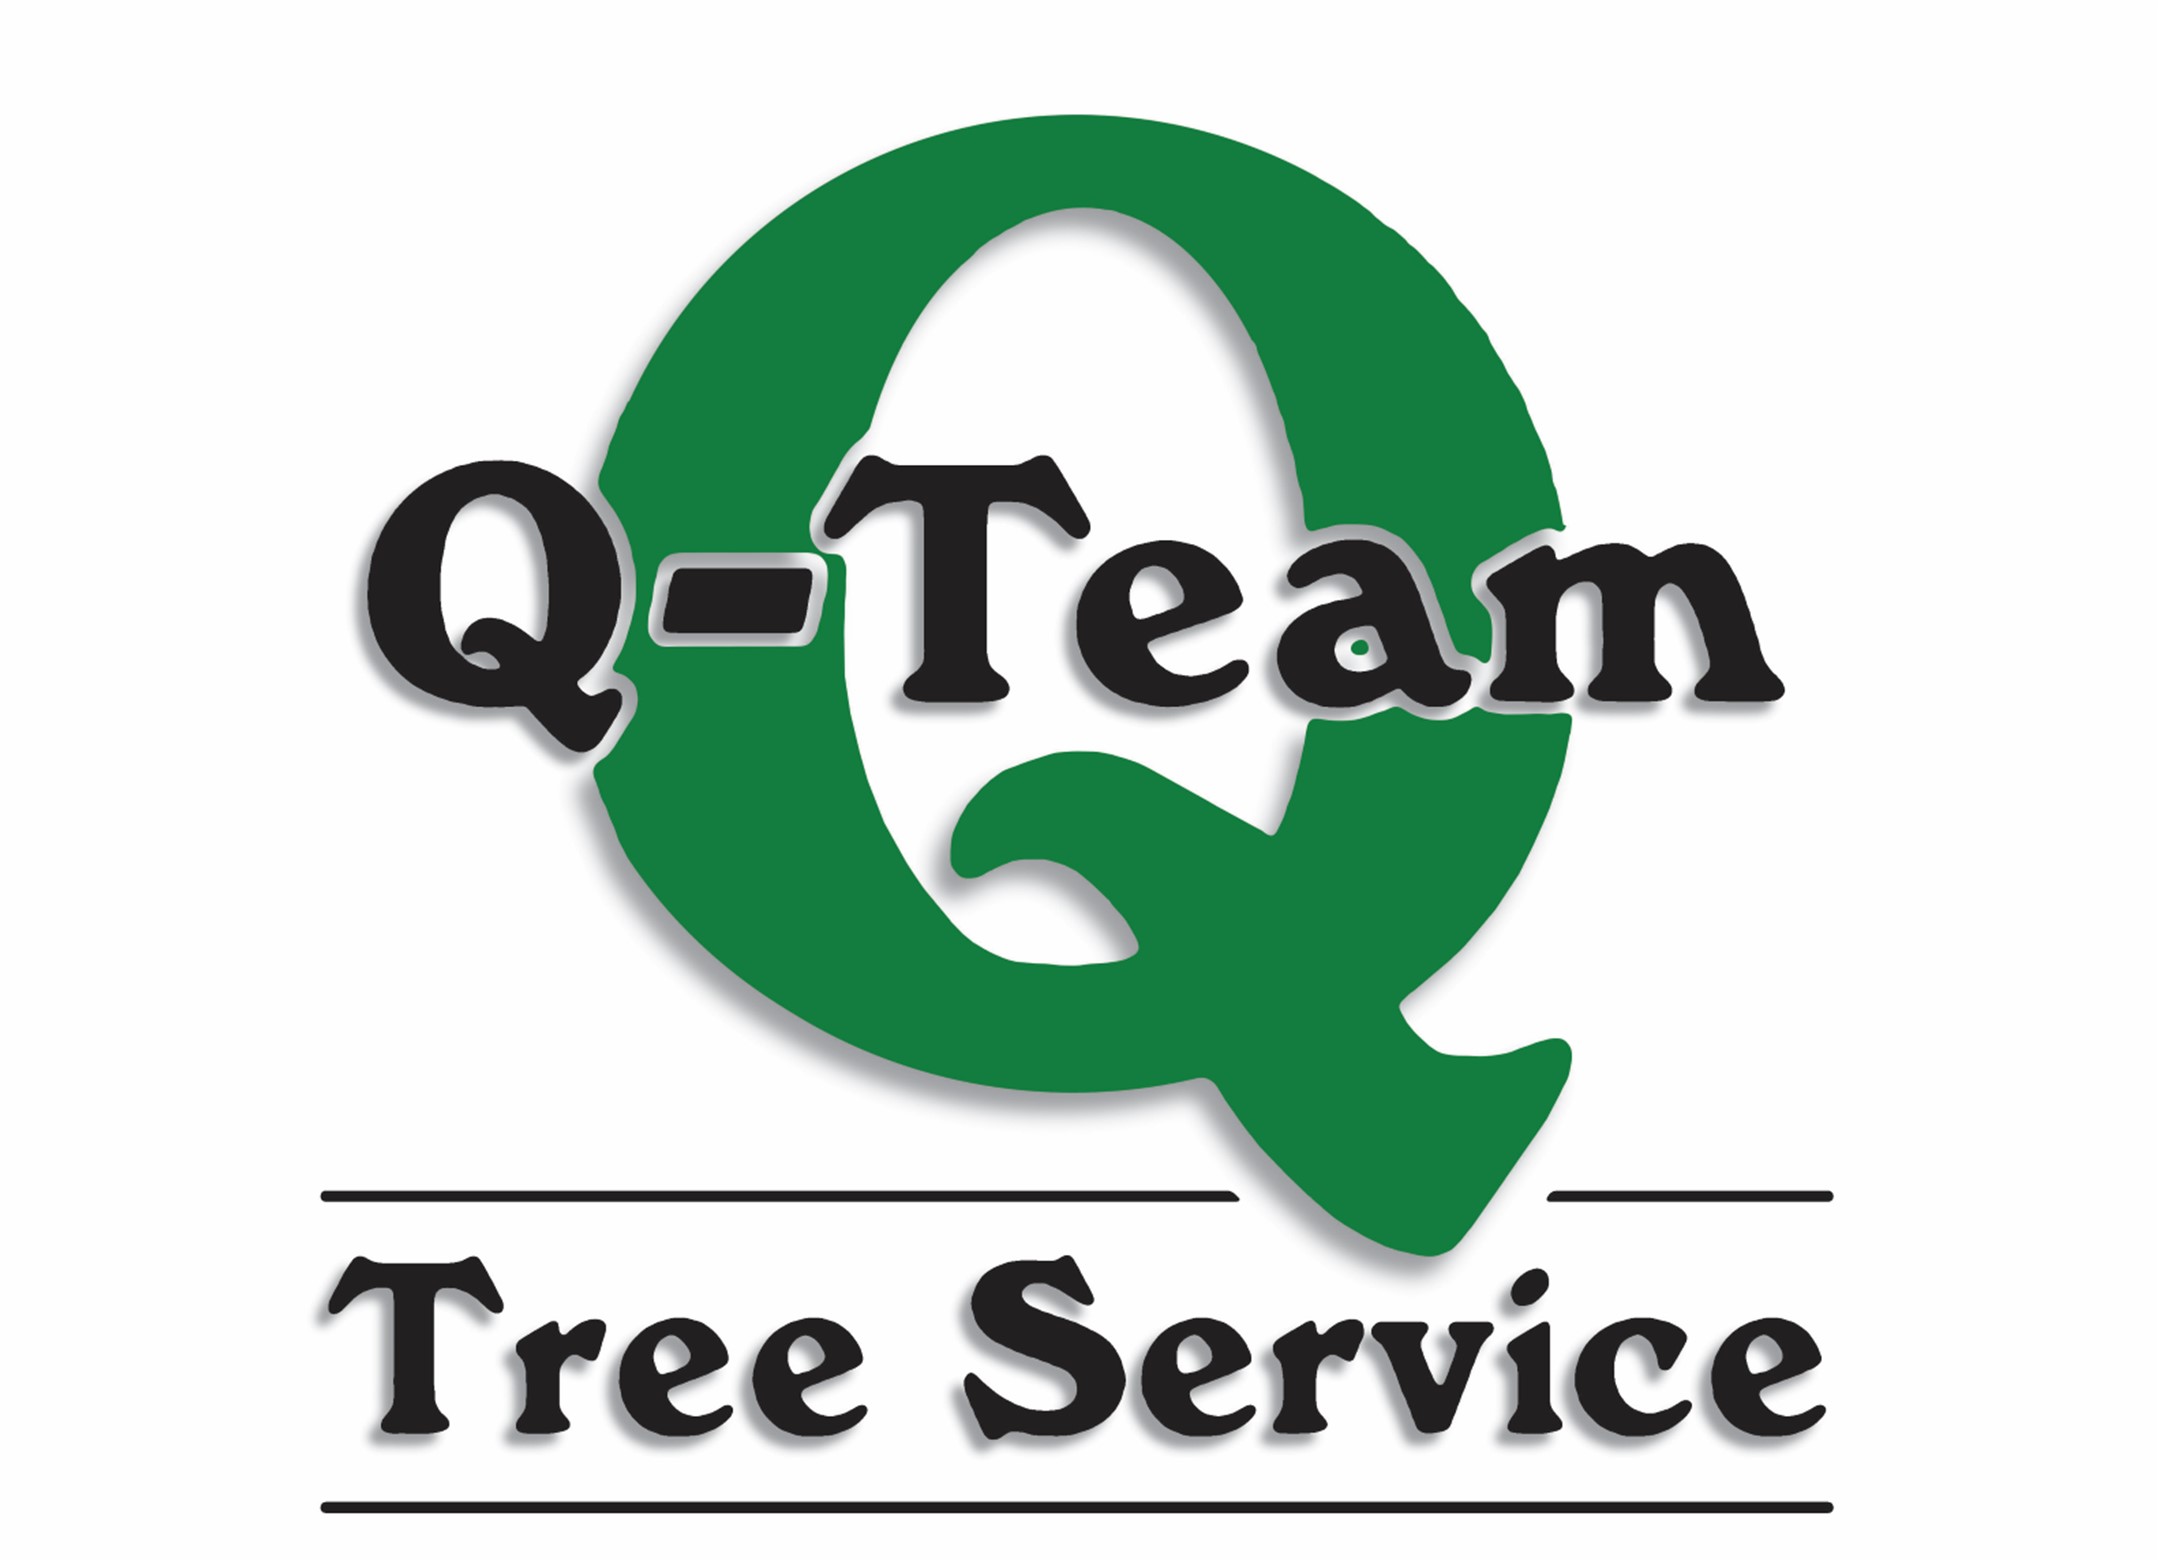 Q-Team Tree Service